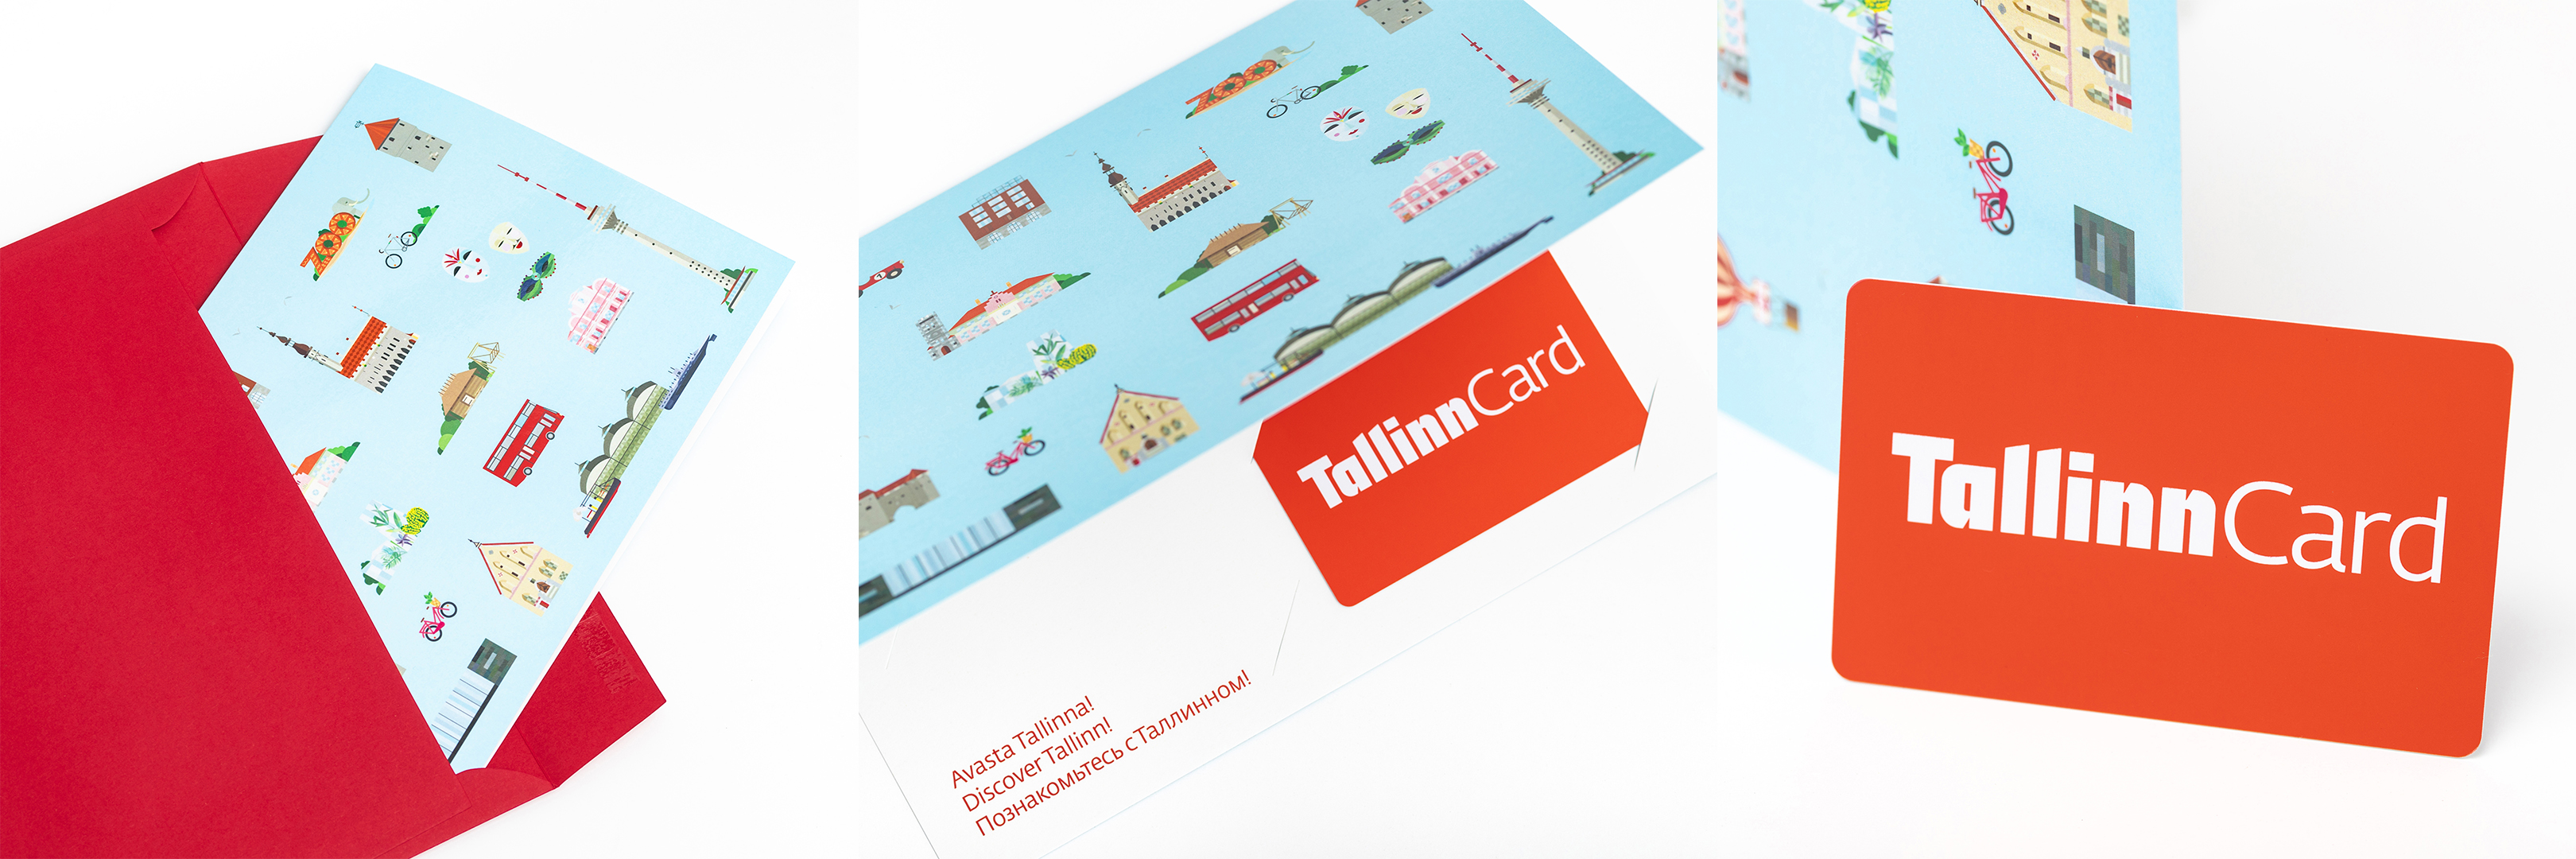 Punane Tallinn Cardi plastikkaart kinkepakendis. Foto: Tallinn Card